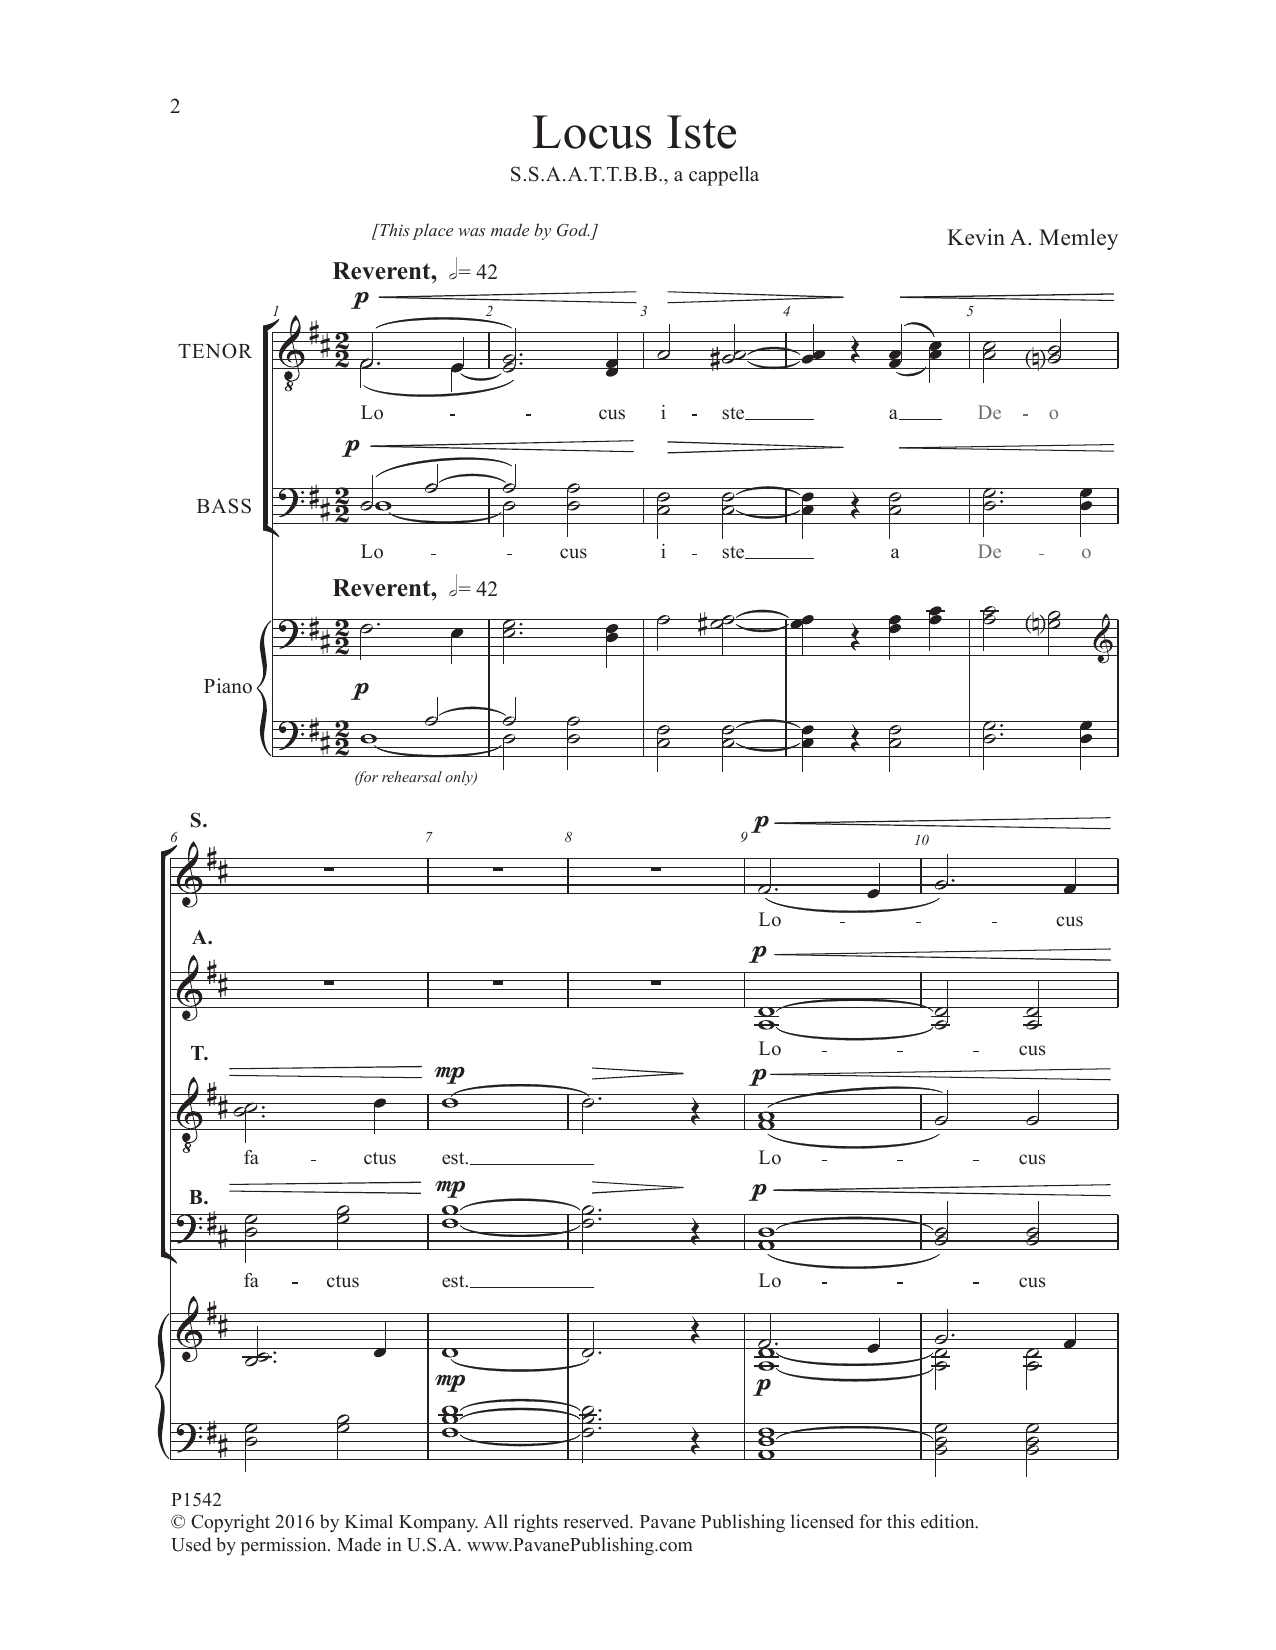 Kevin Memley Locus Iste Sheet Music Notes & Chords for TTBB Choir - Download or Print PDF